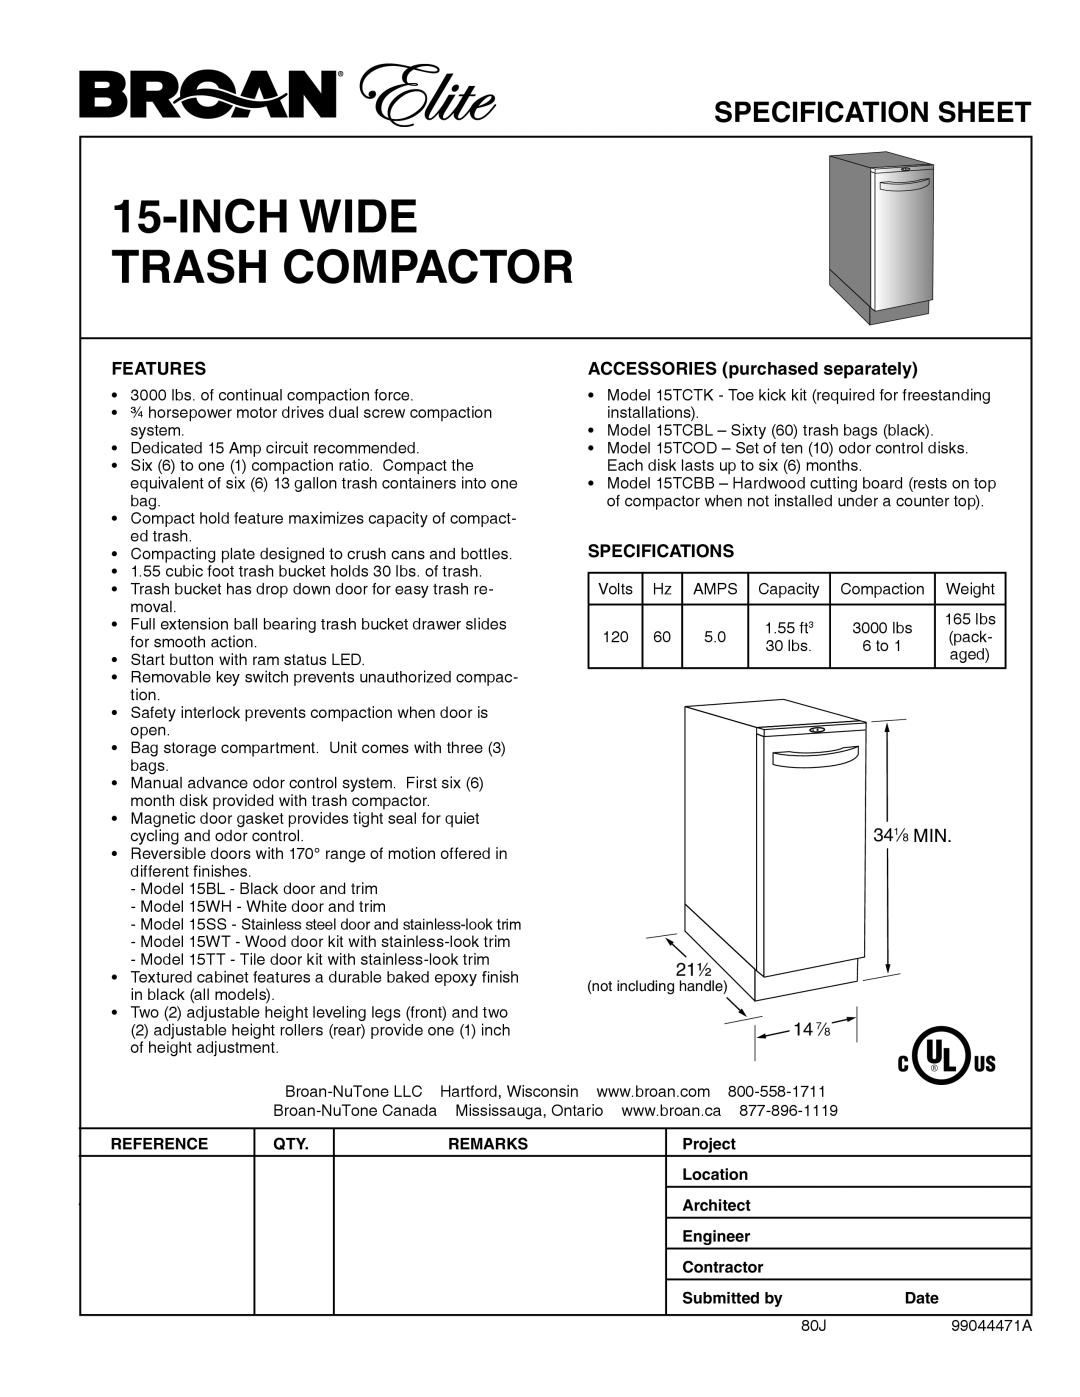 Broan 15Bl specifications inch wide trash compactor, Specification Sheet, 341⁄8 MIN 21½, 14 7⁄8, Features, Specifications 